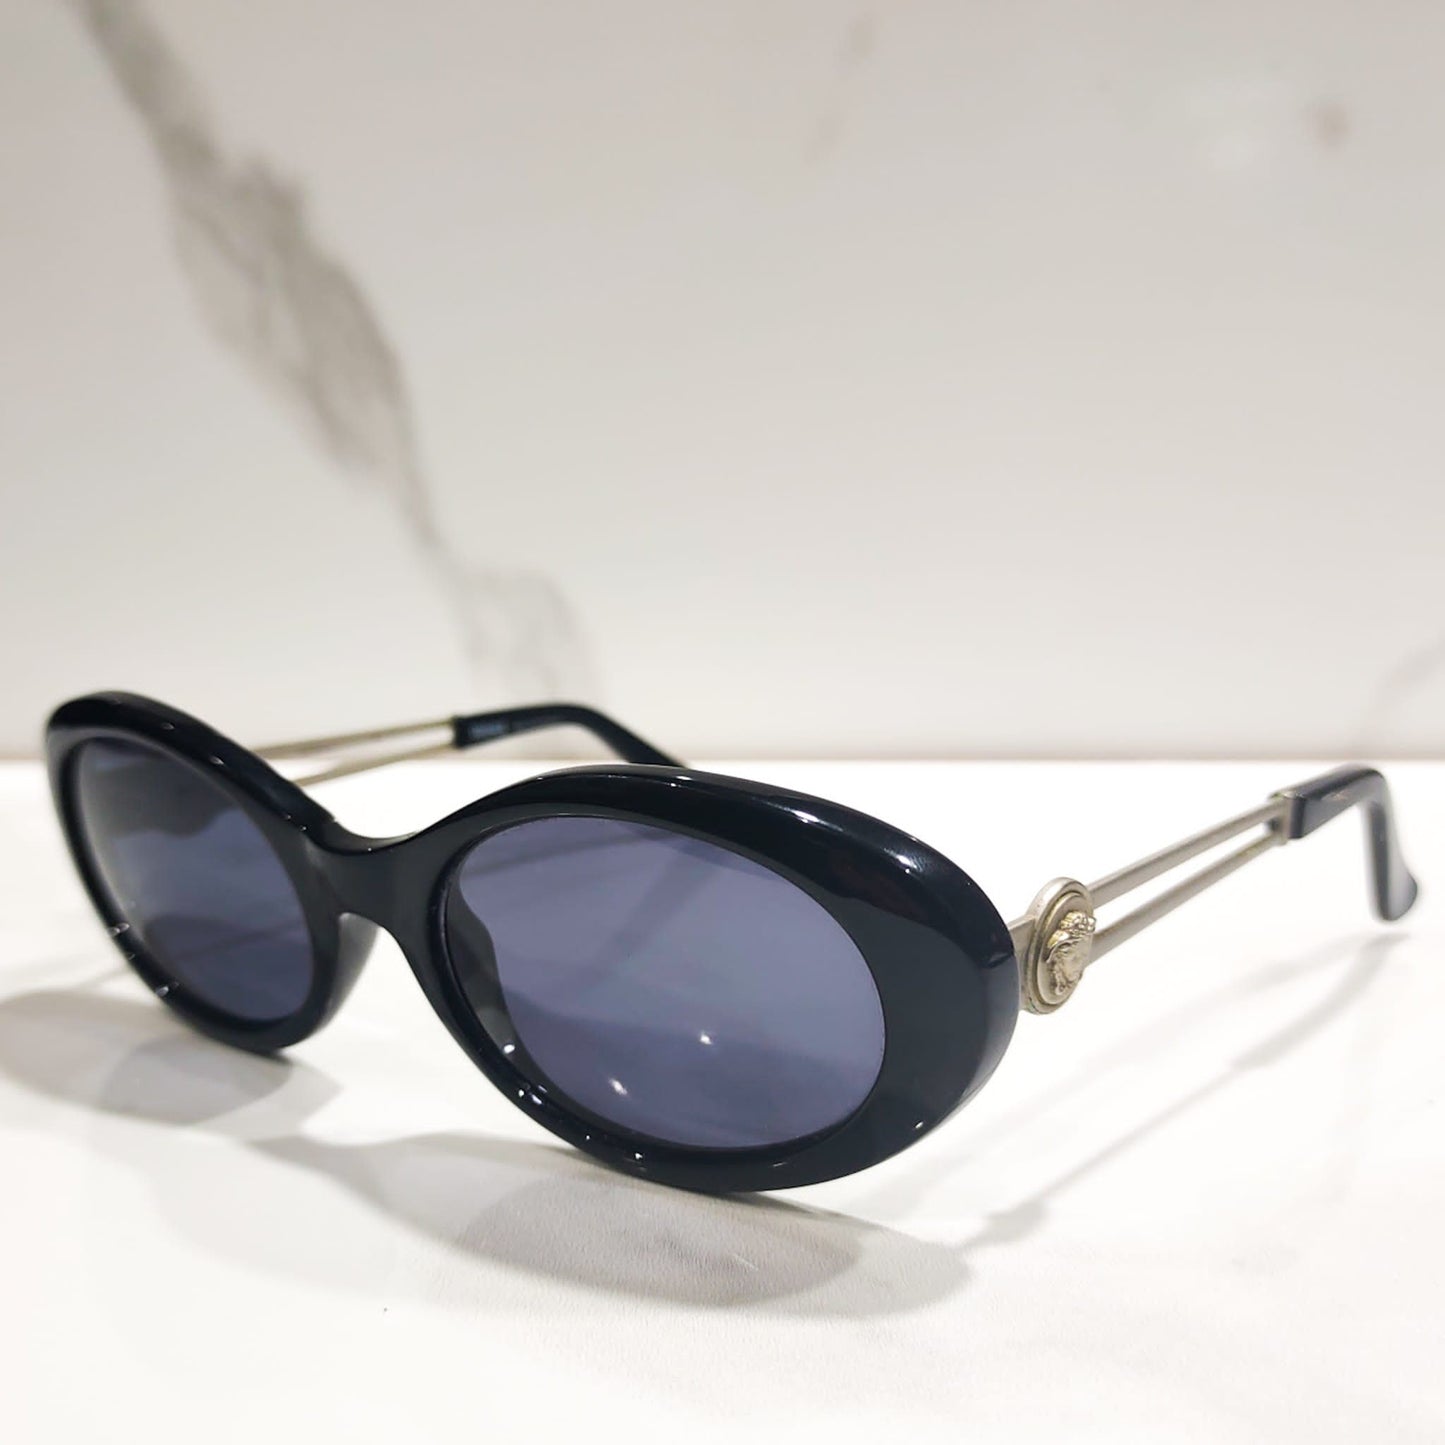 Gianni Versace 342 vintage lunetta brille occhiali anni '90